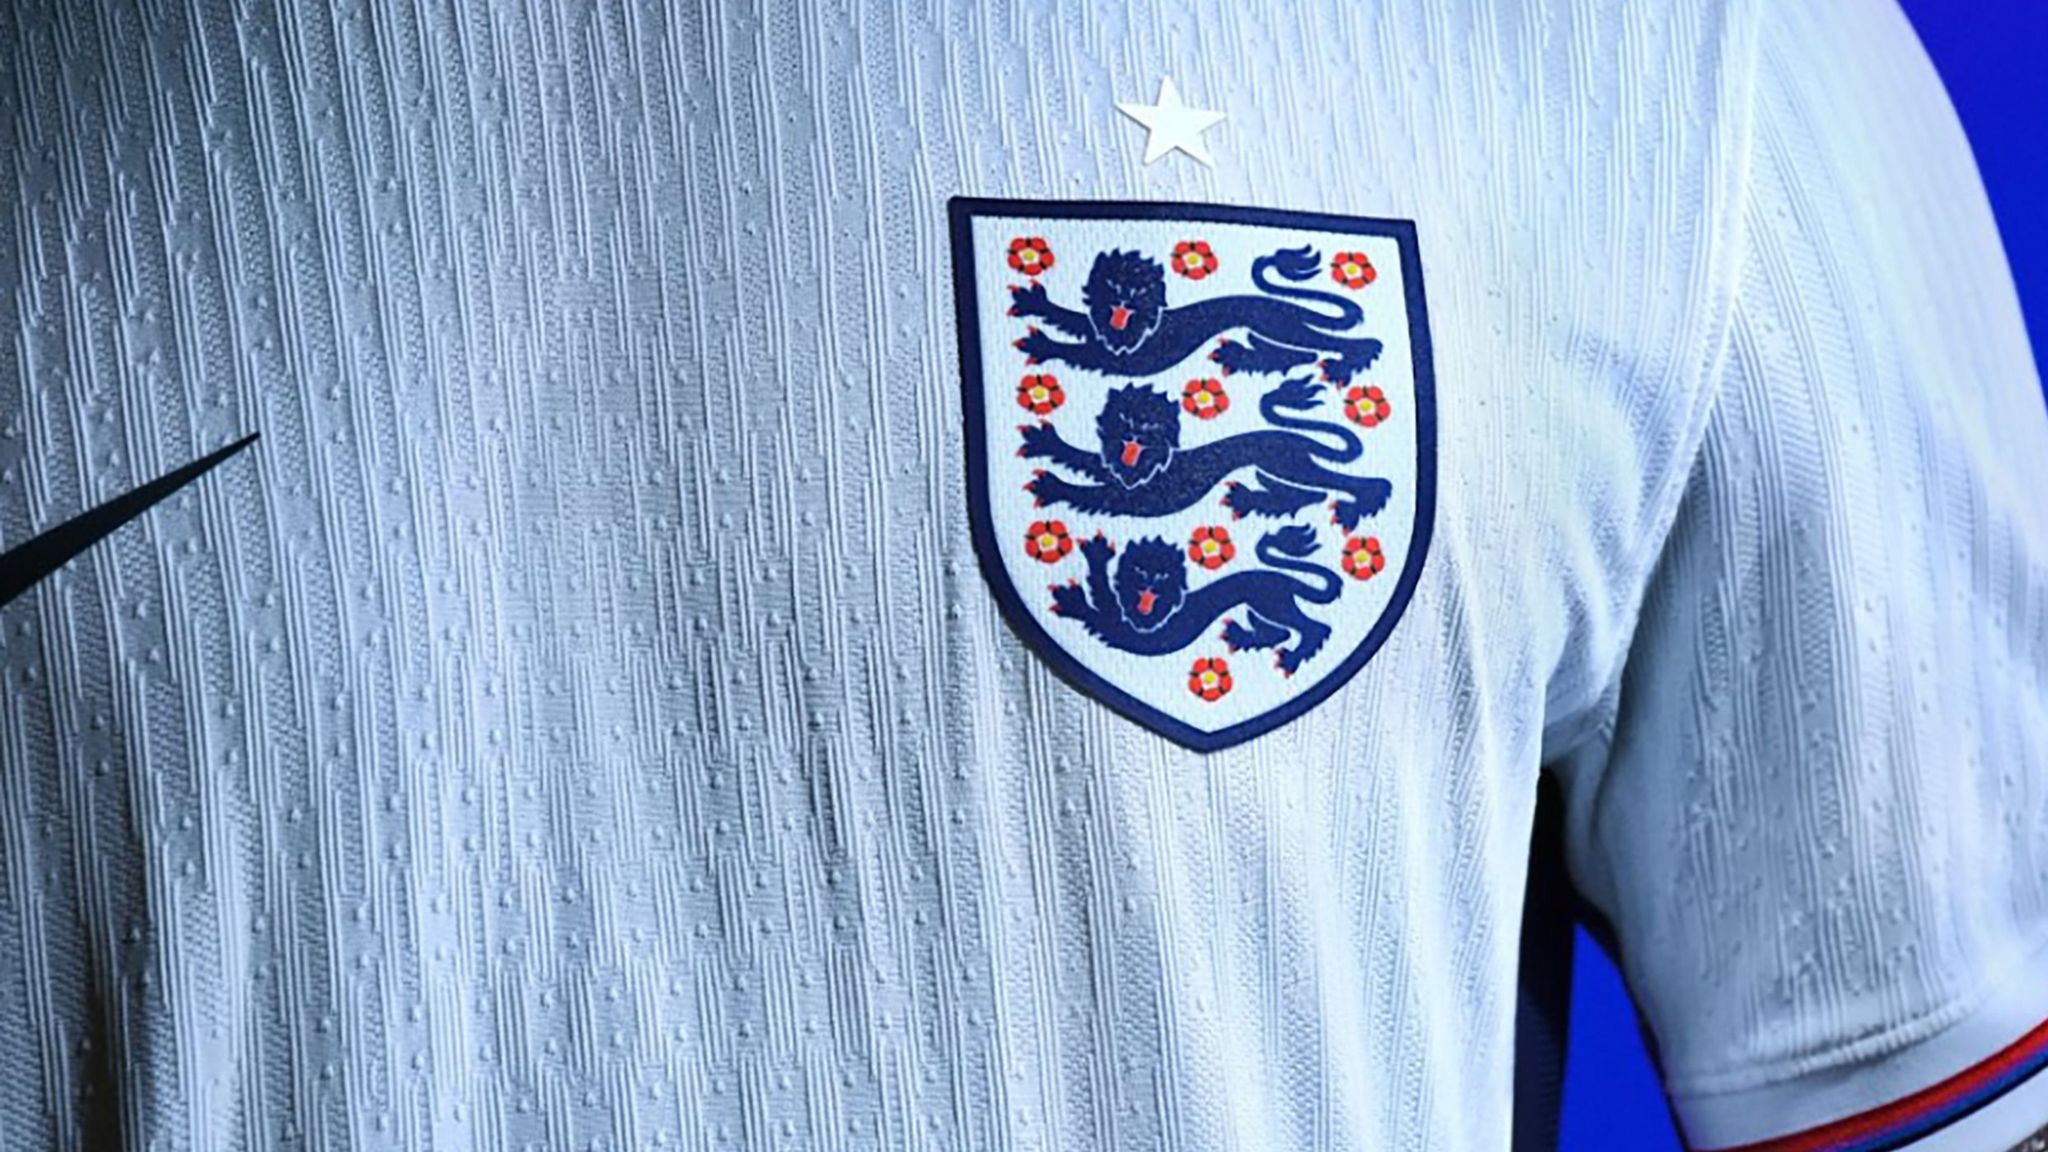 England's three lions badge on shirt